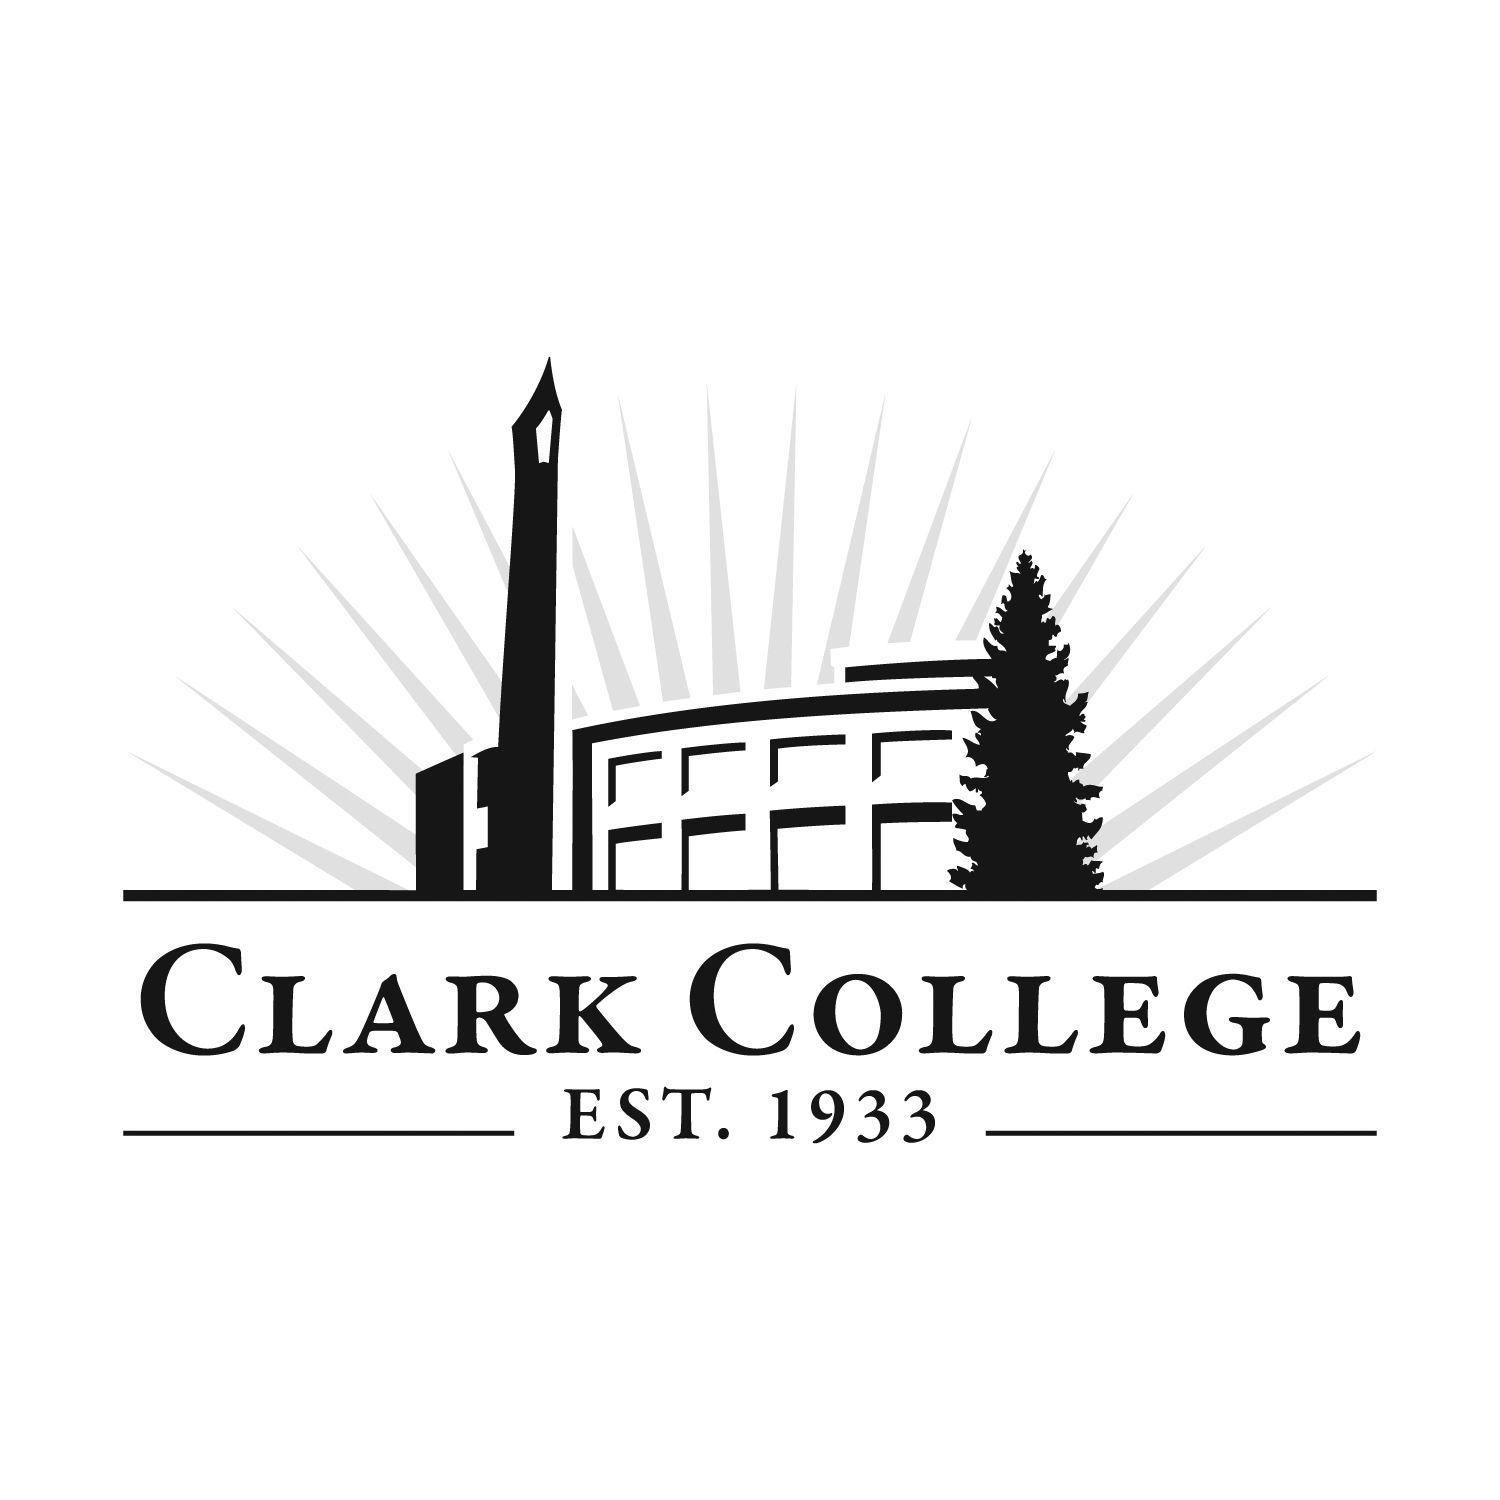 Clark College Logo - Brand and Logos